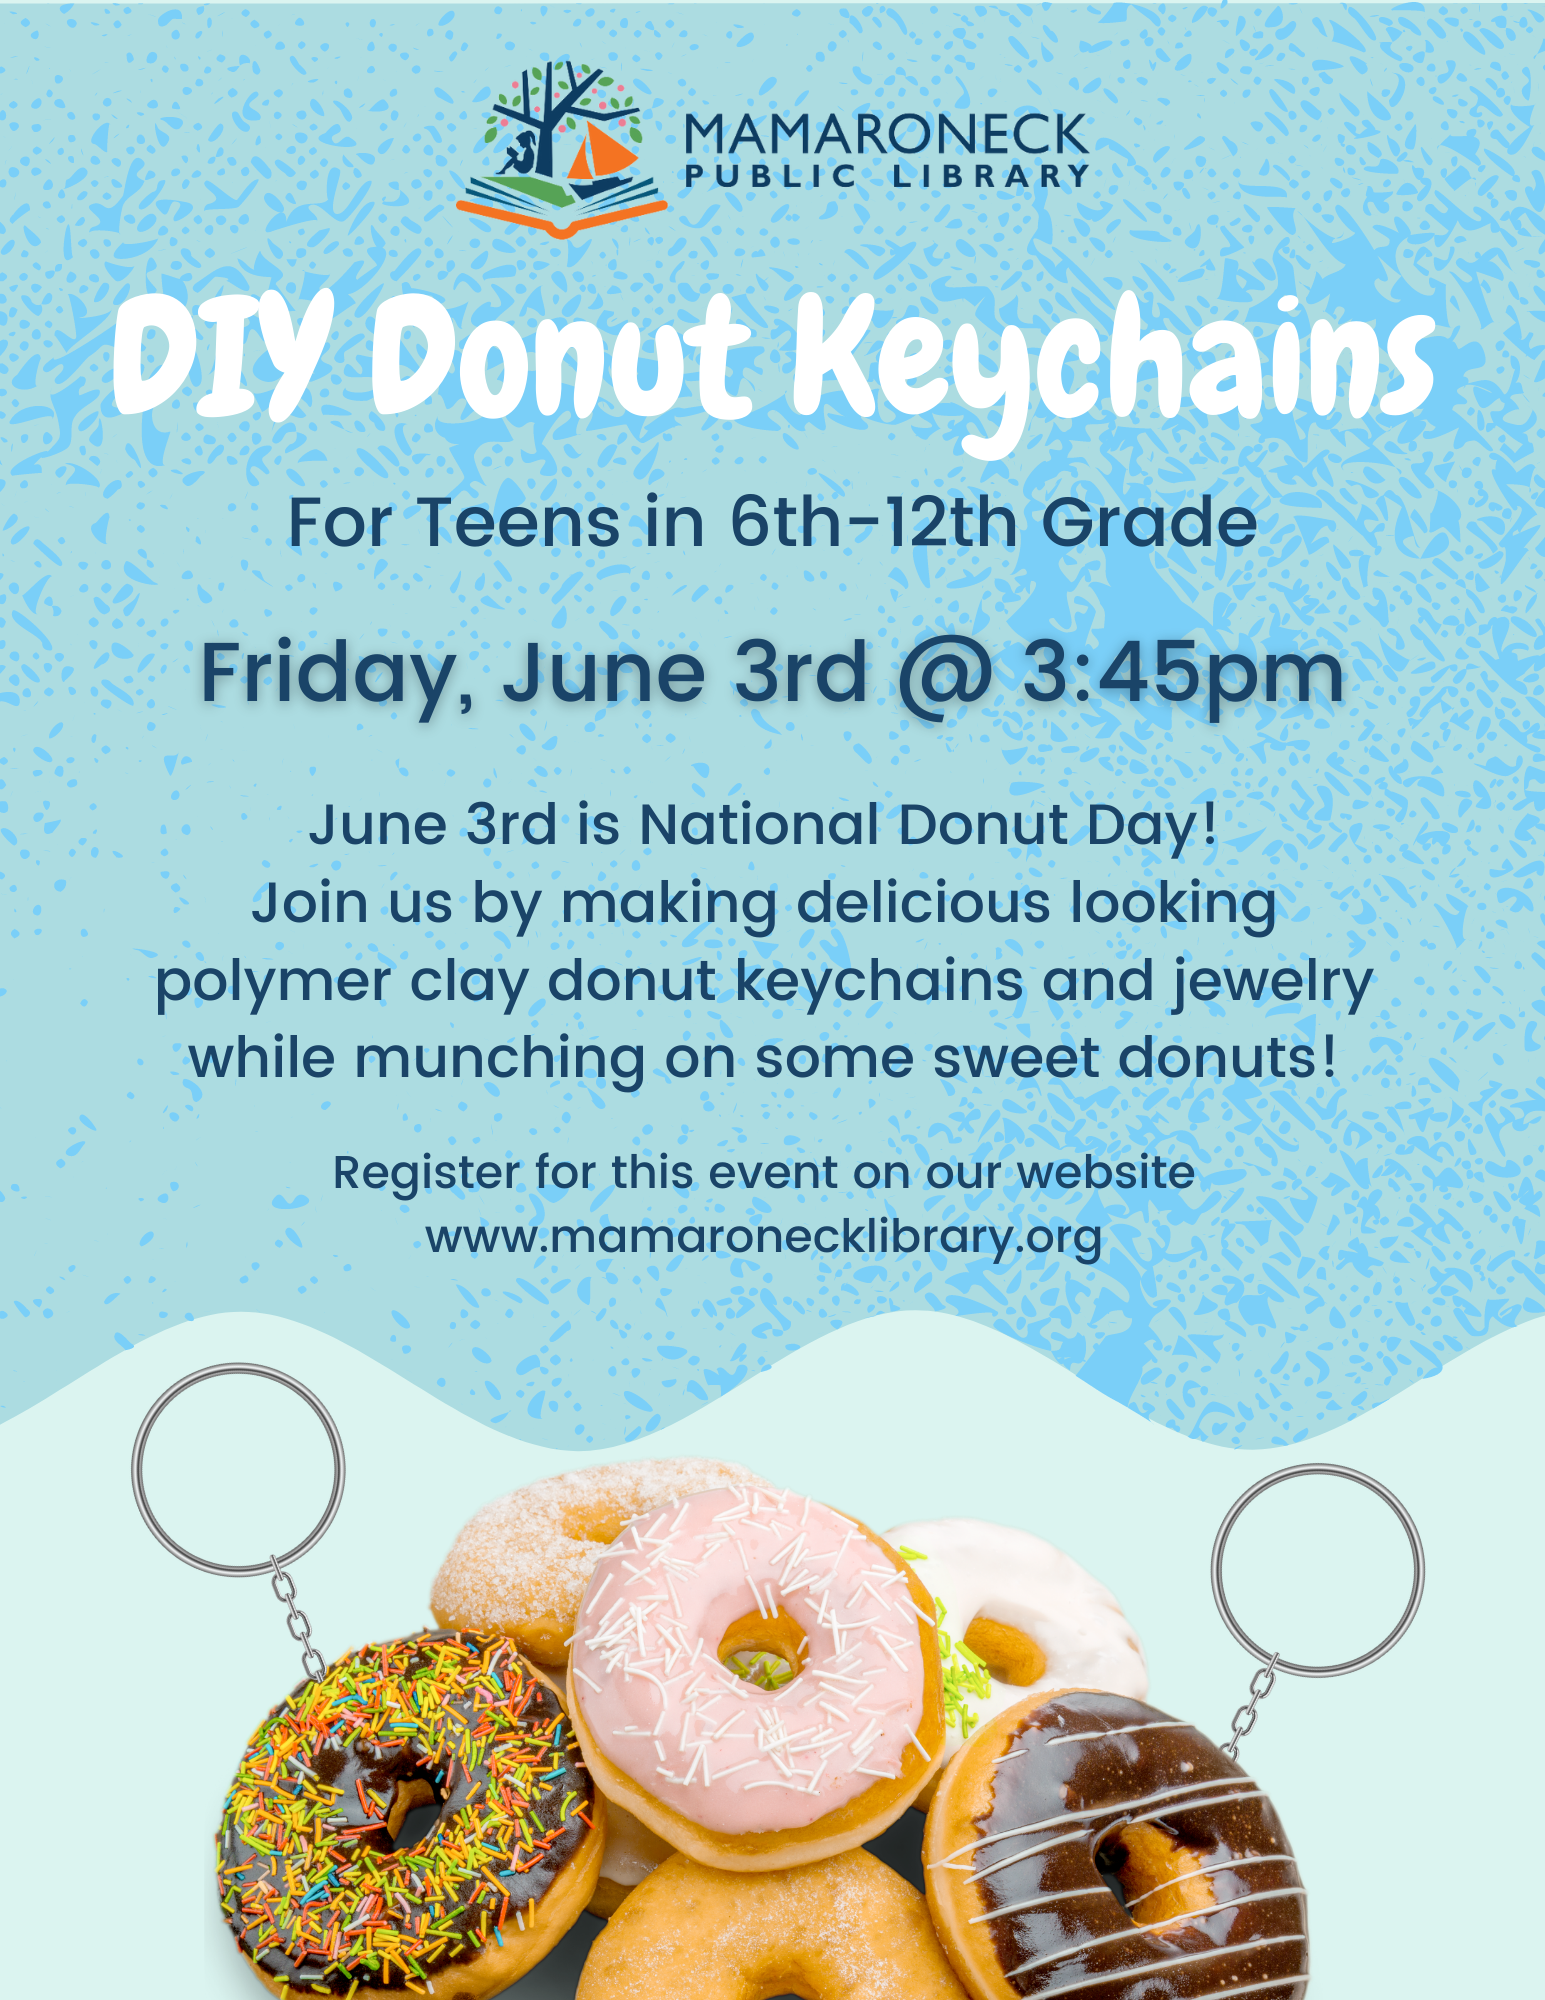 DIY Donut Keychain for Teens